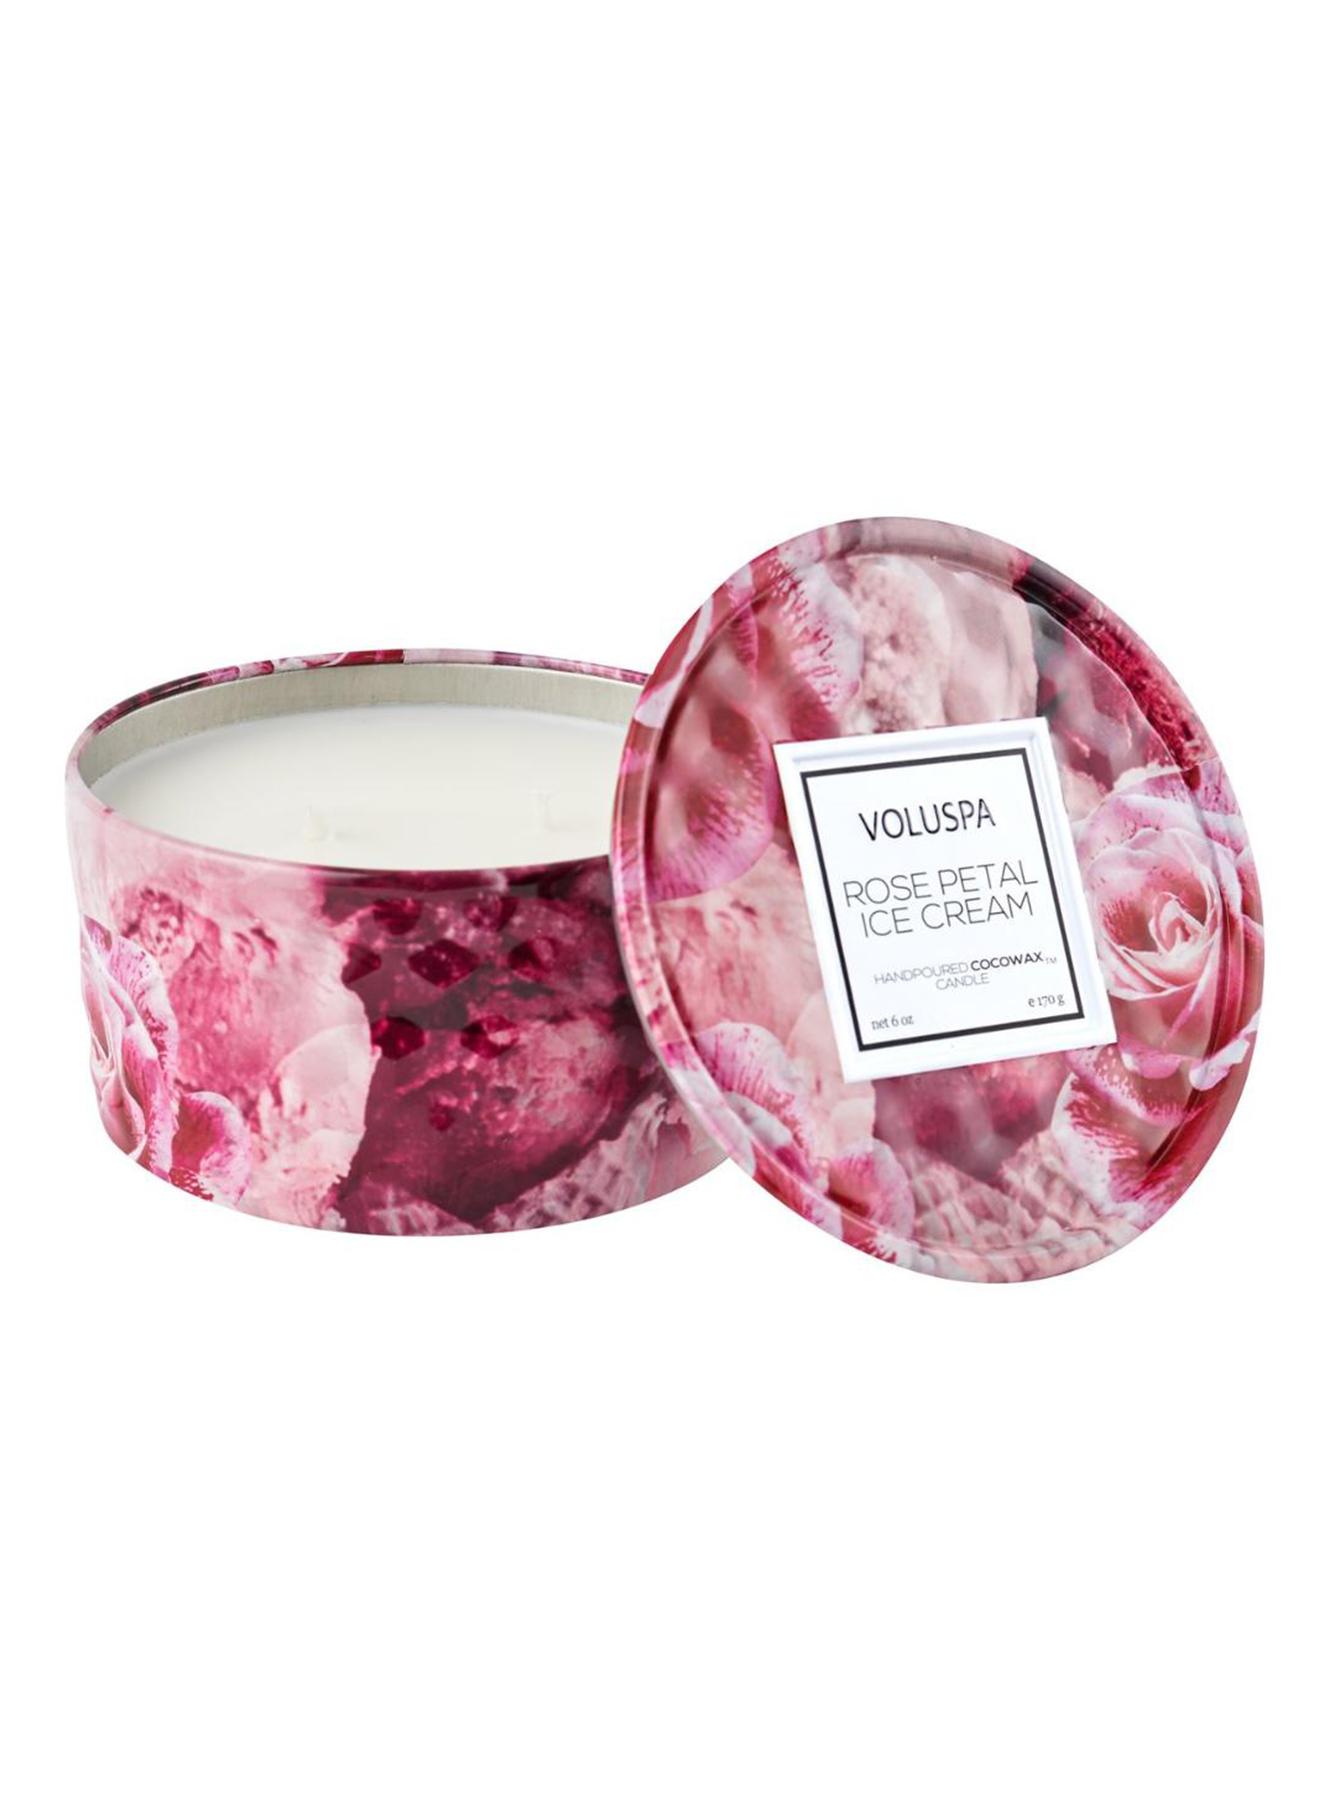 Rose petal ice cream 2 wick tin candle - 1